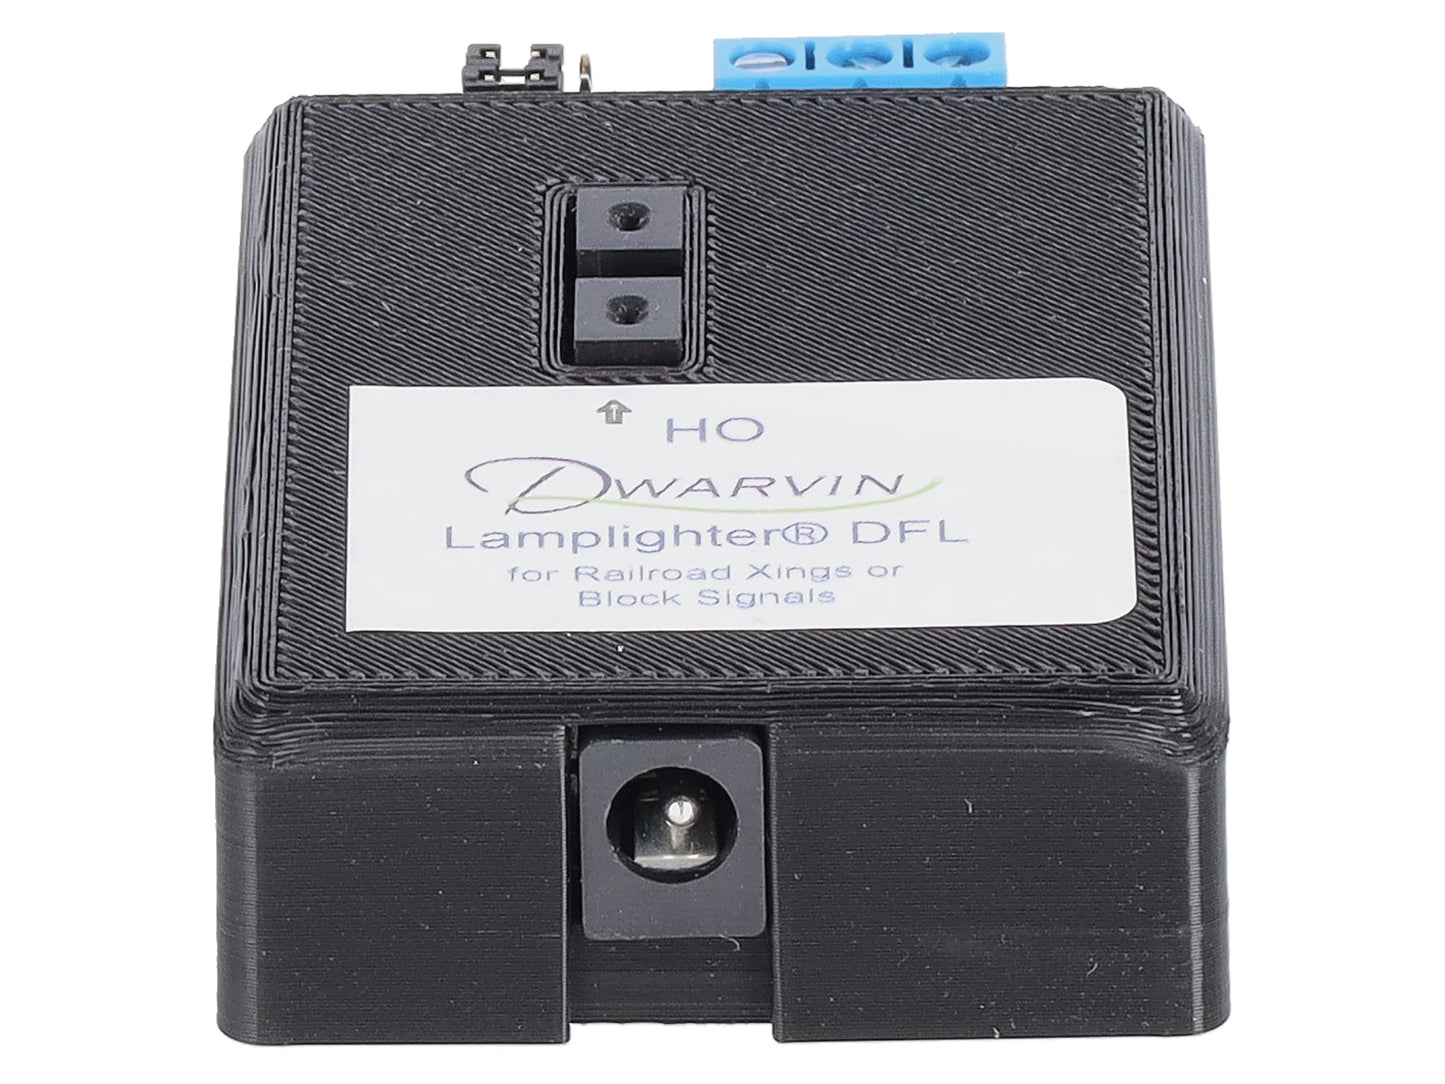 Dwarvin DVDFL102 HO Lamplighter DFL w/o Power Supply For Fiber Lighting Systems